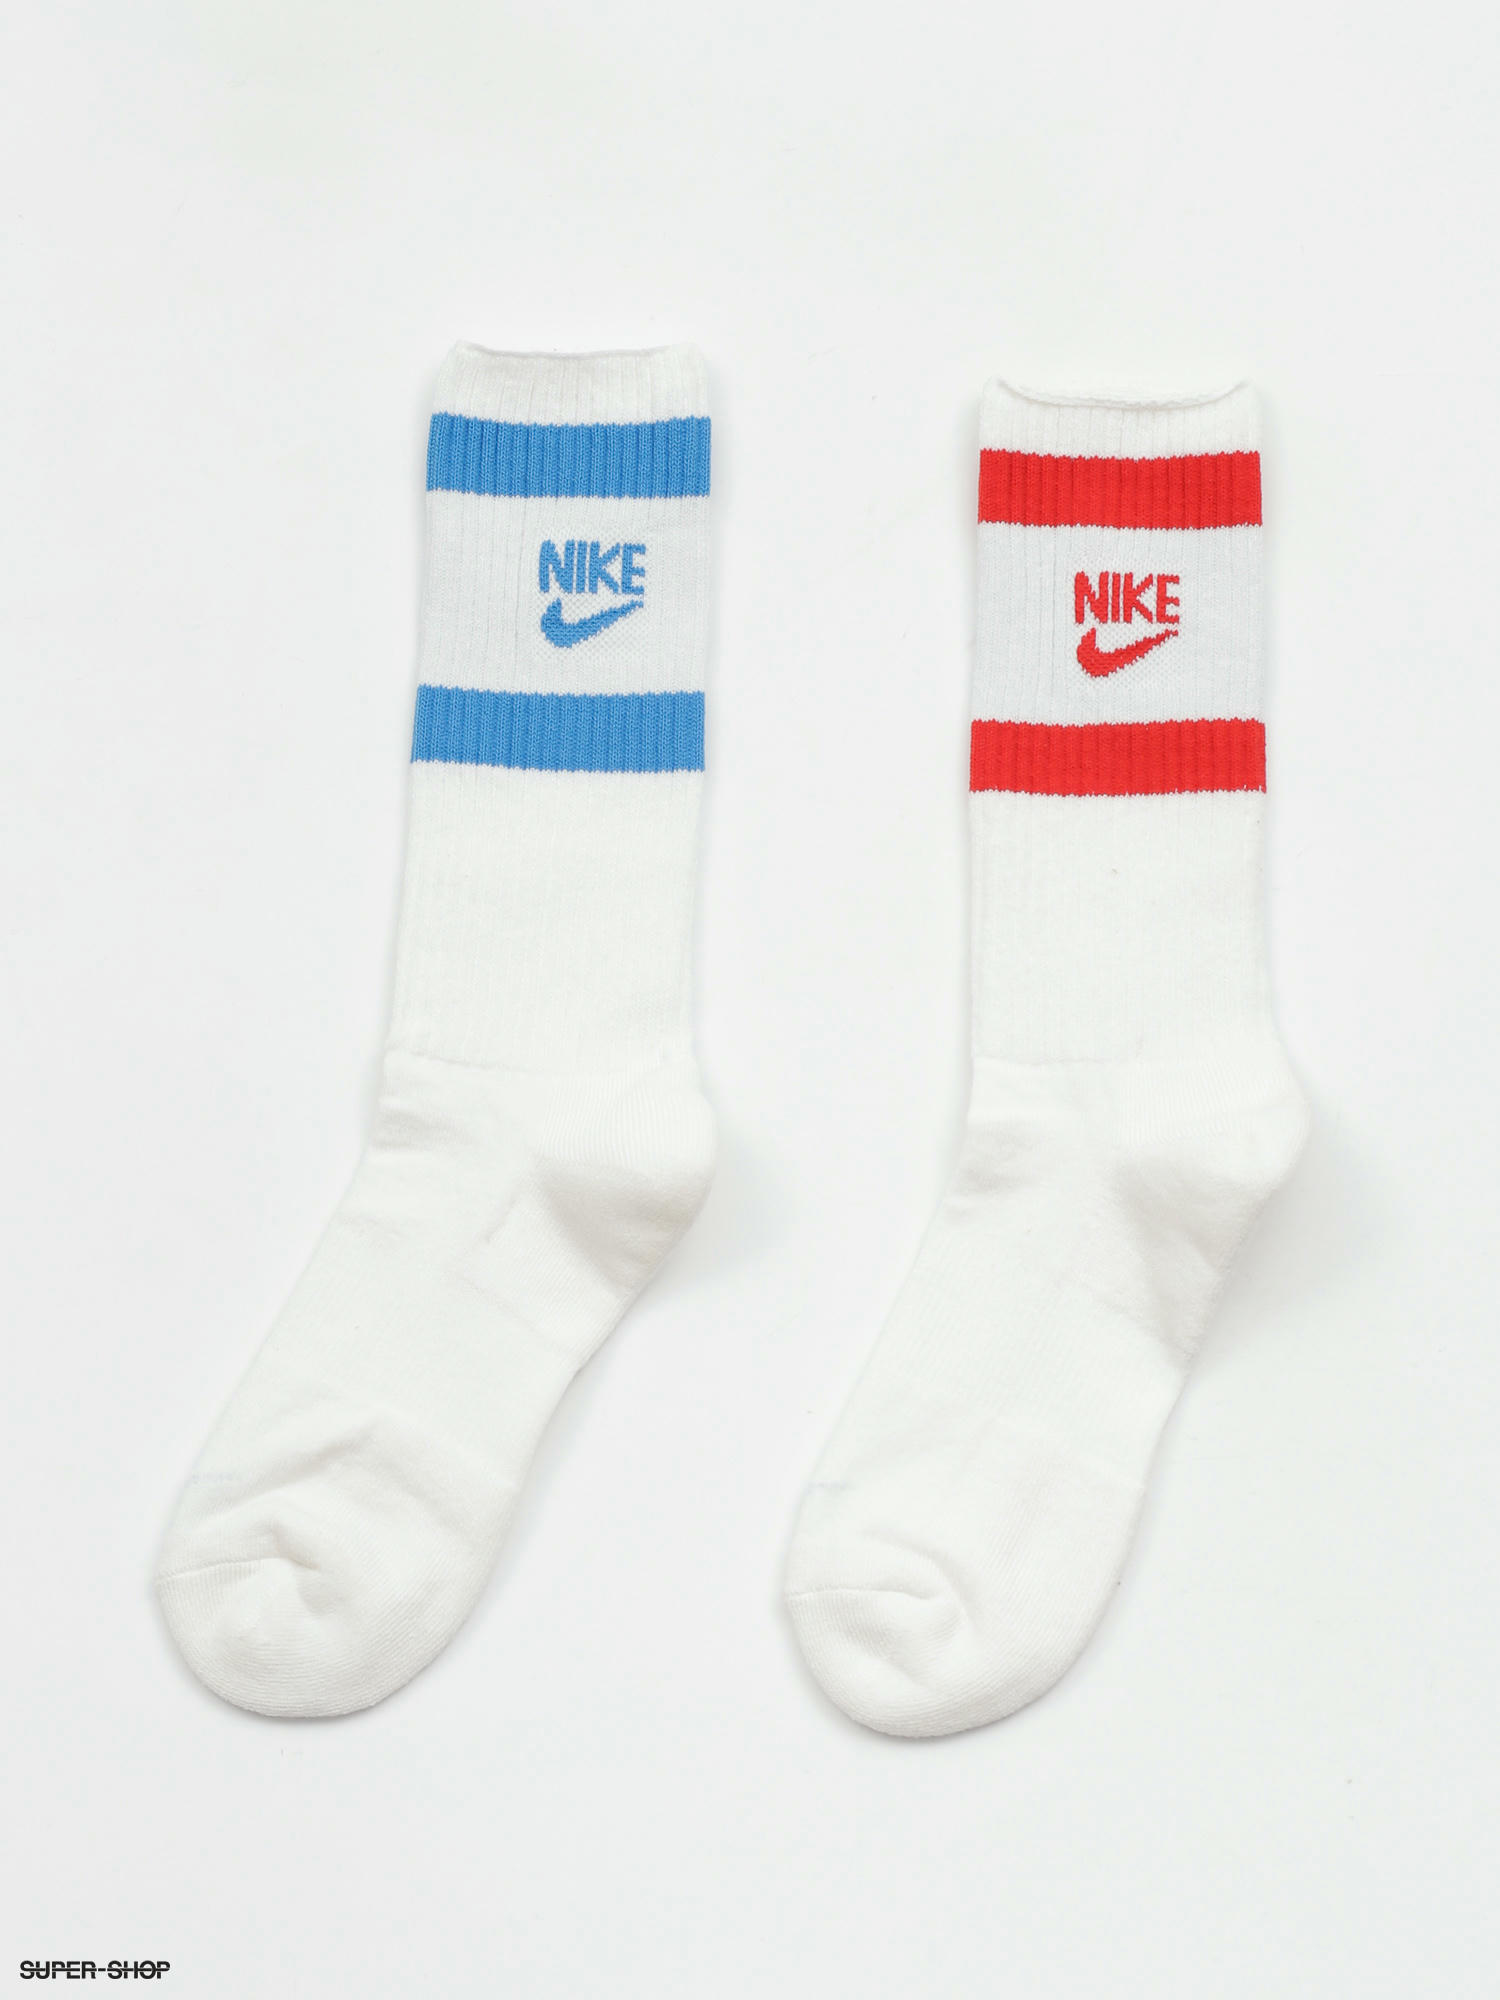 different color nike socks